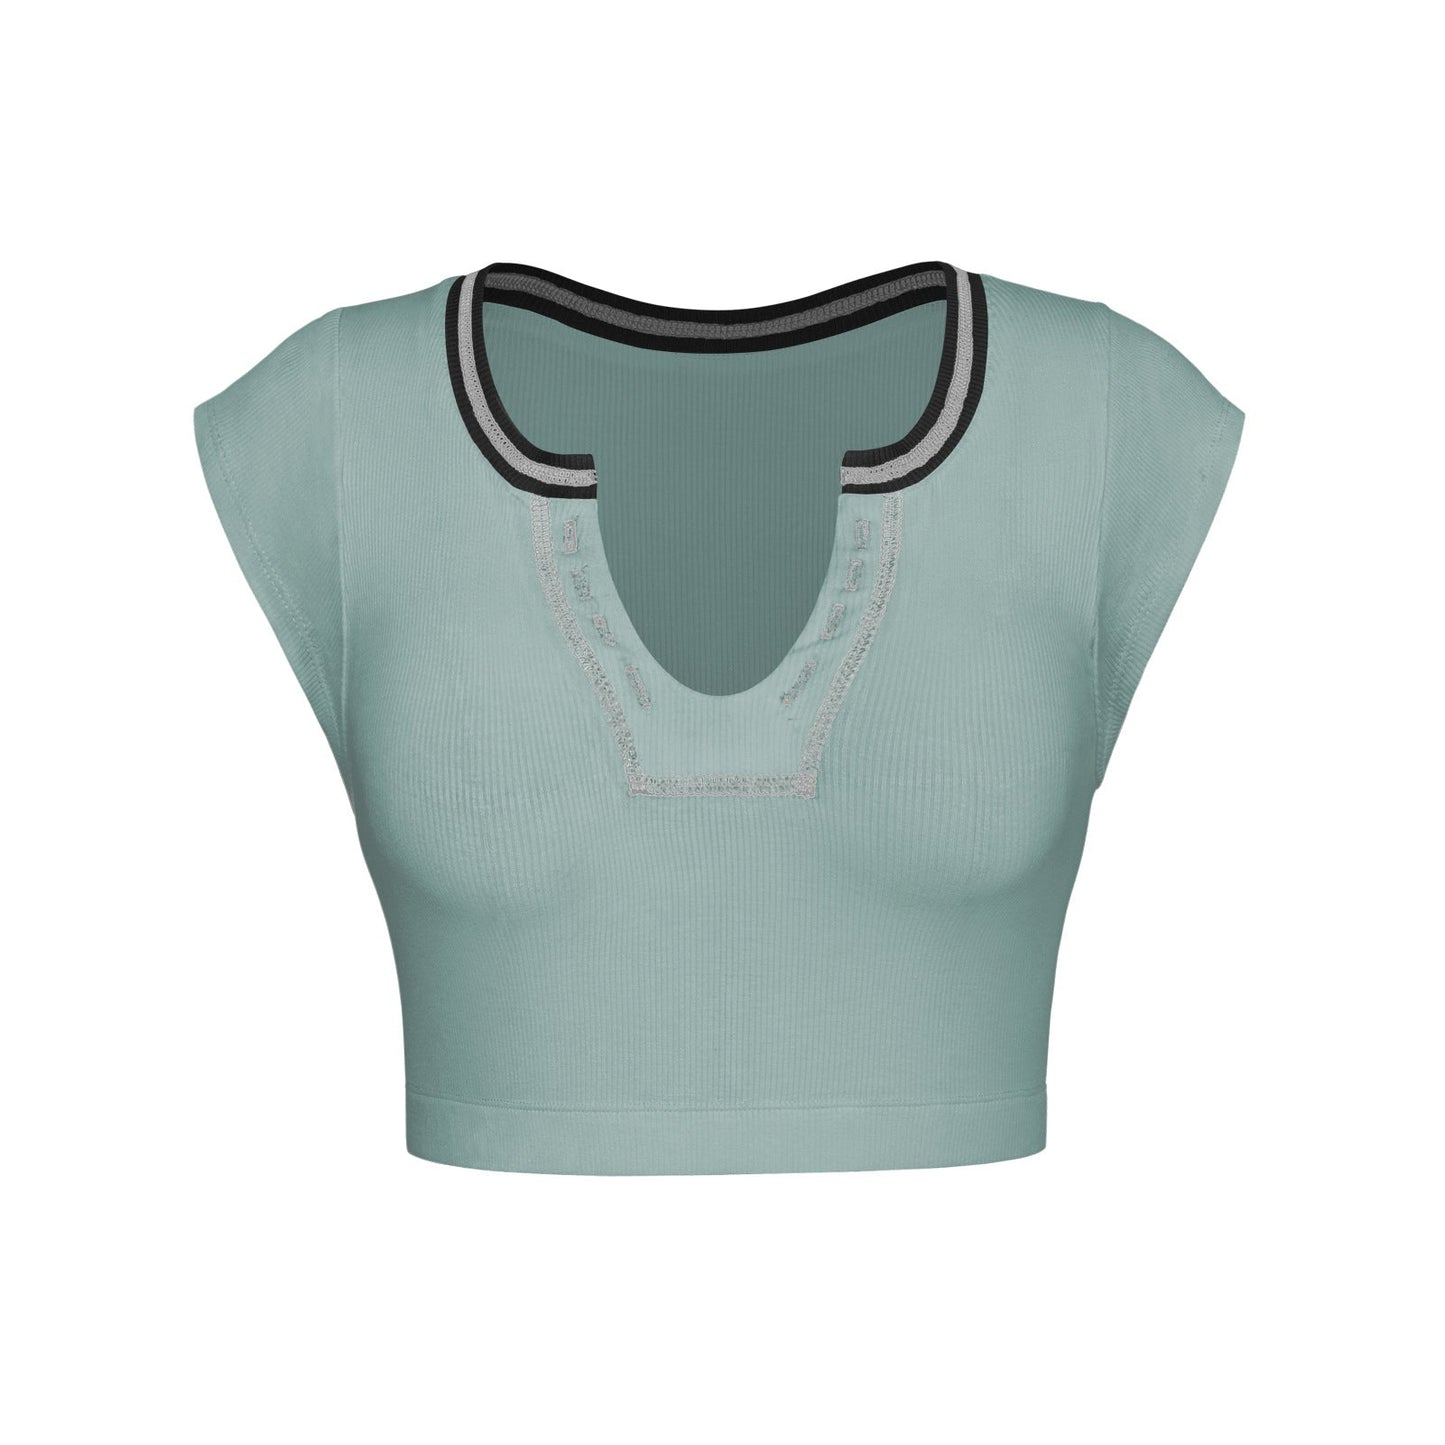 Sexy Designed Midriff Baring Knitted T Shirts-Shirts & Tops-Light Green-XS-Free Shipping Leatheretro